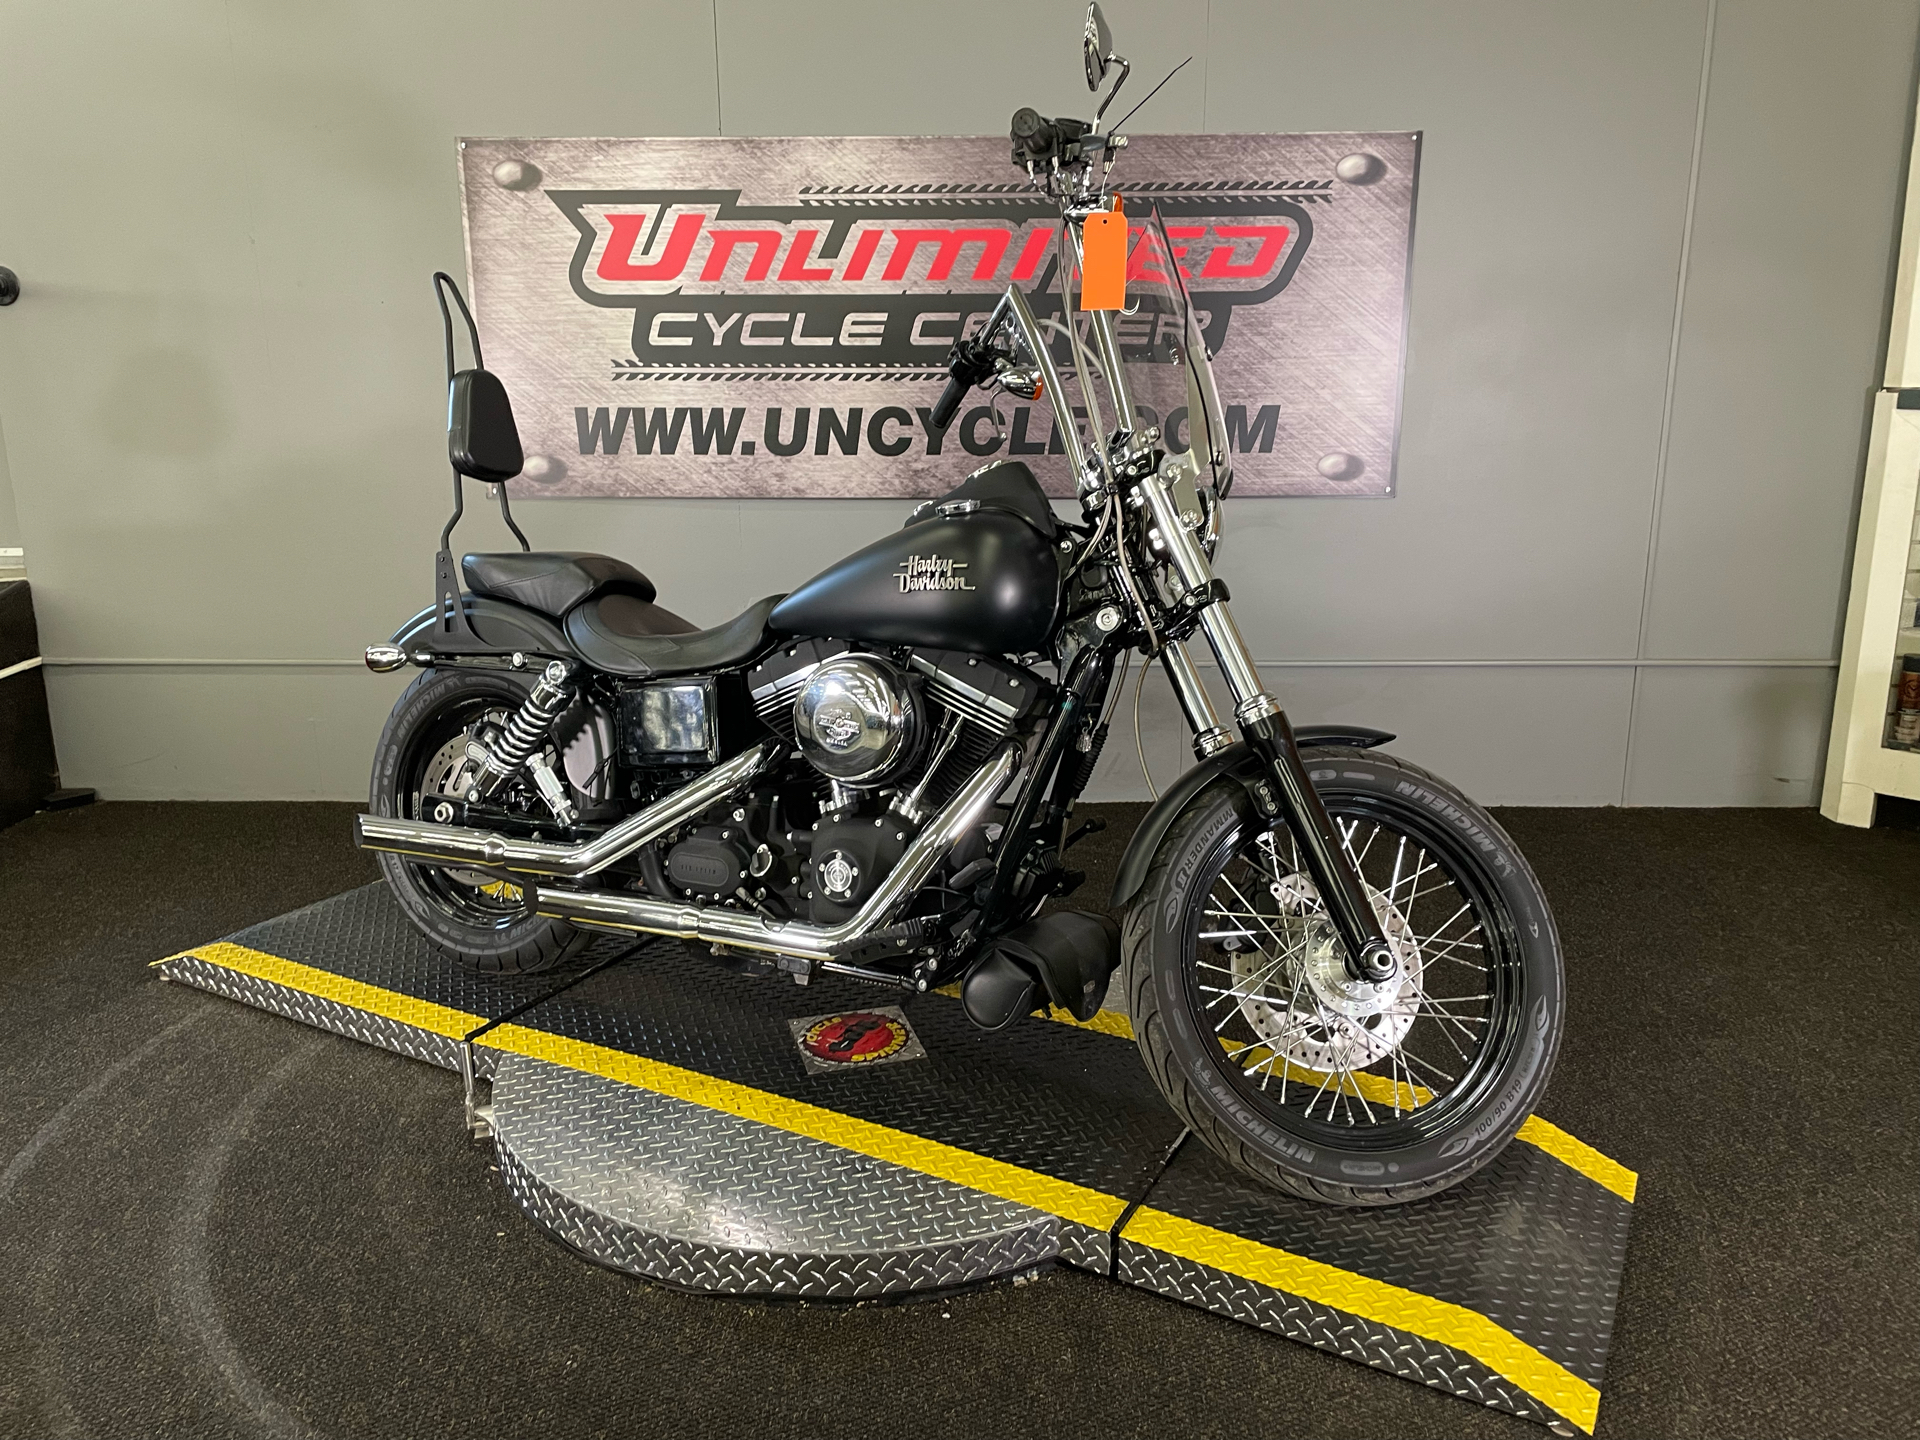 2013 Harley-Davidson Dyna® Street Bob® in Tyrone, Pennsylvania - Photo 1